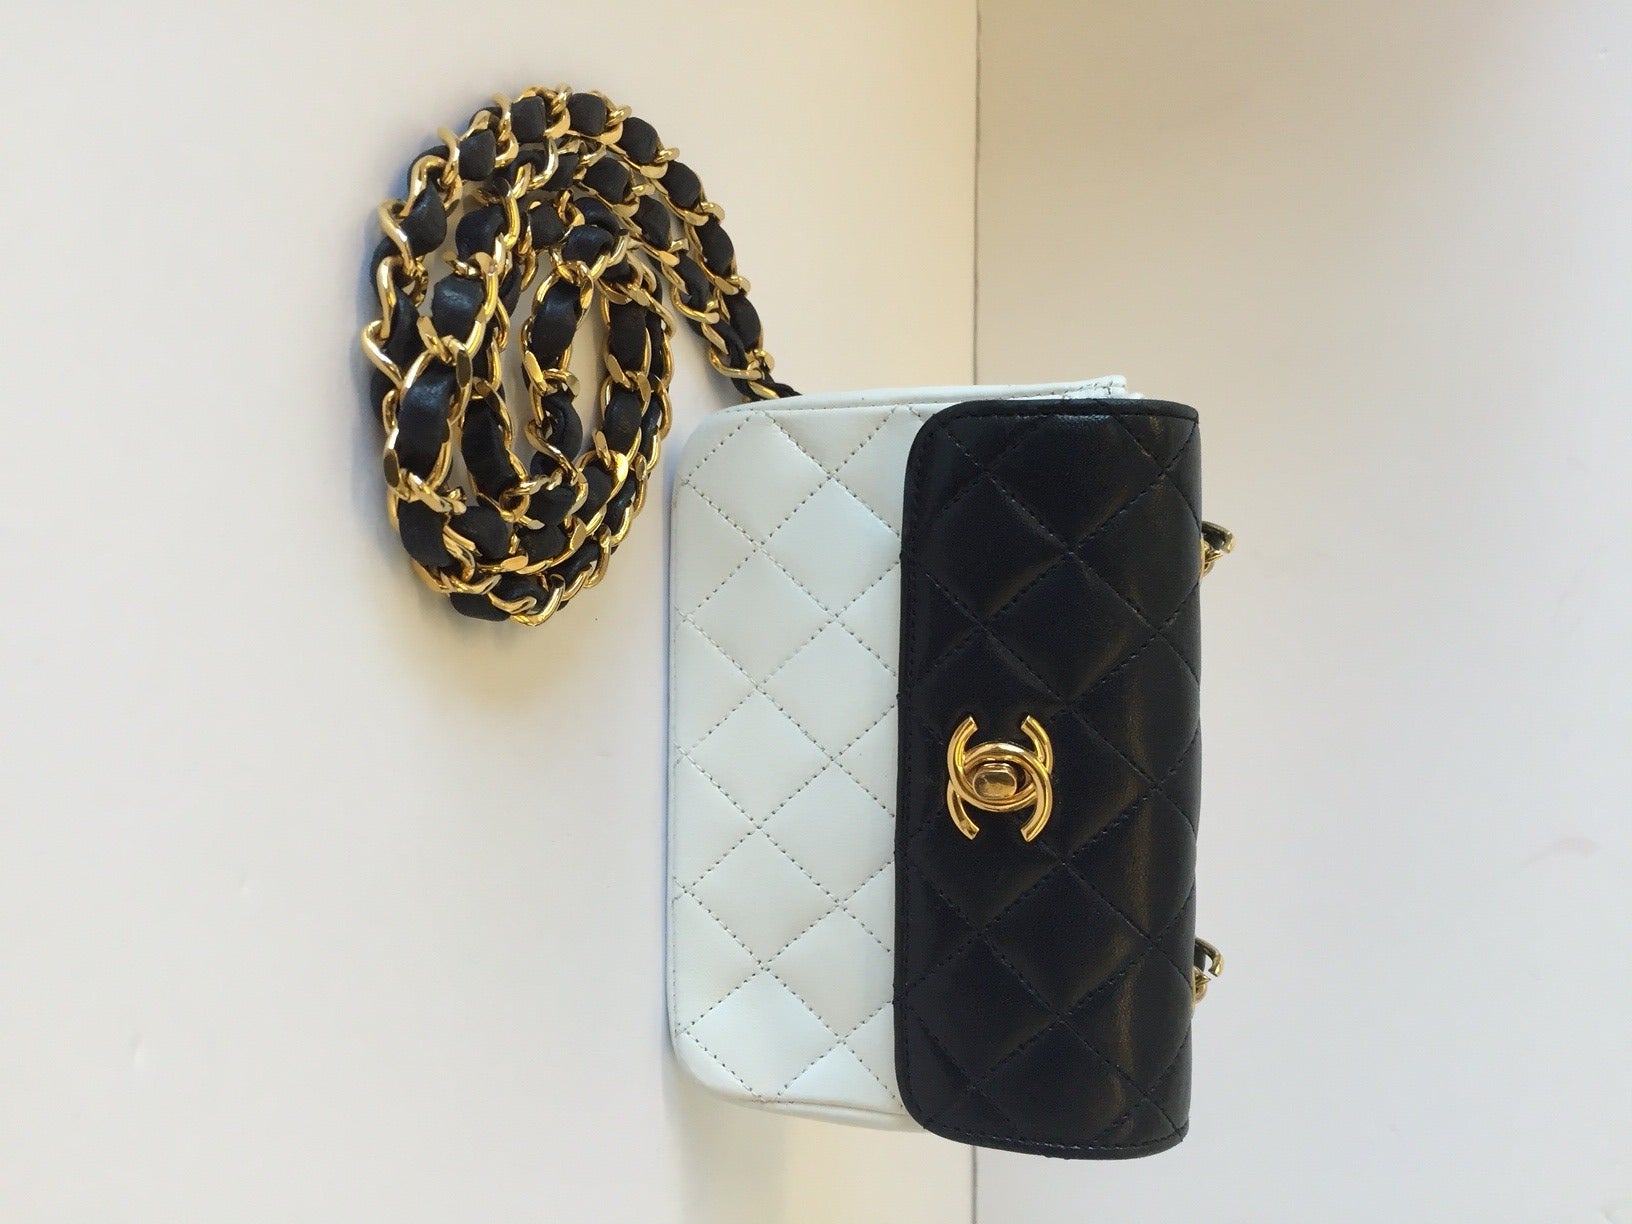 Brand: Chanel
Color: White/Black
Size: Mini

Bag Length: 6